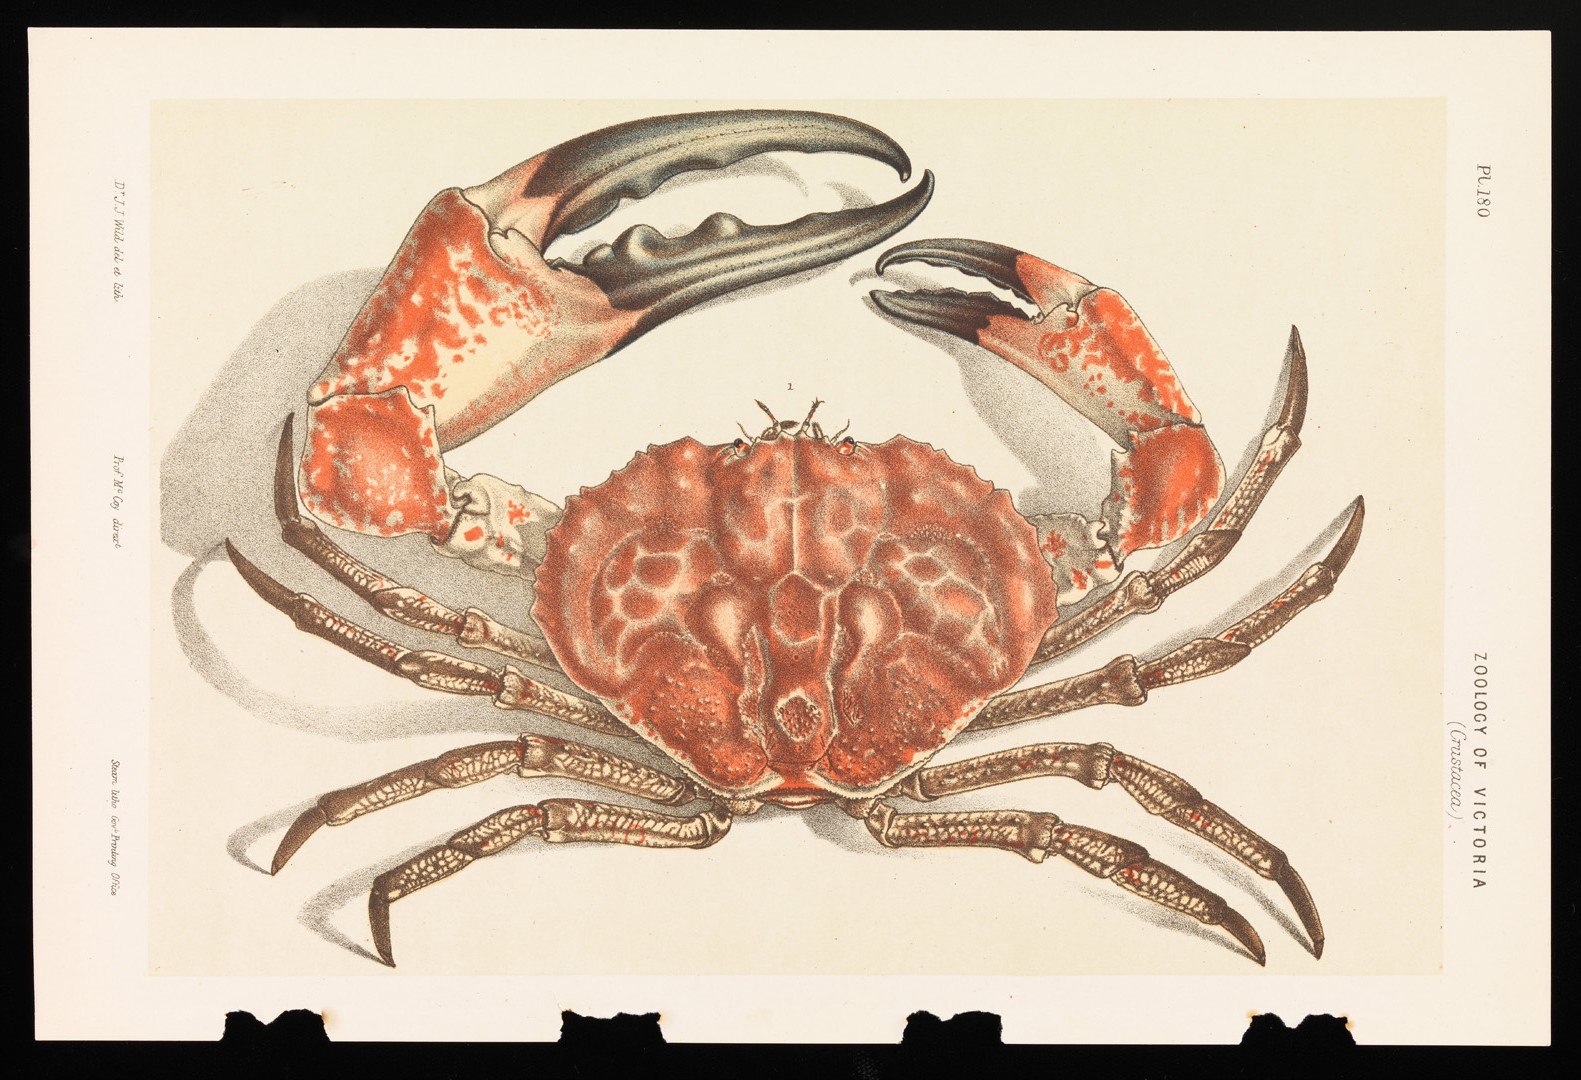 Colossal Crab